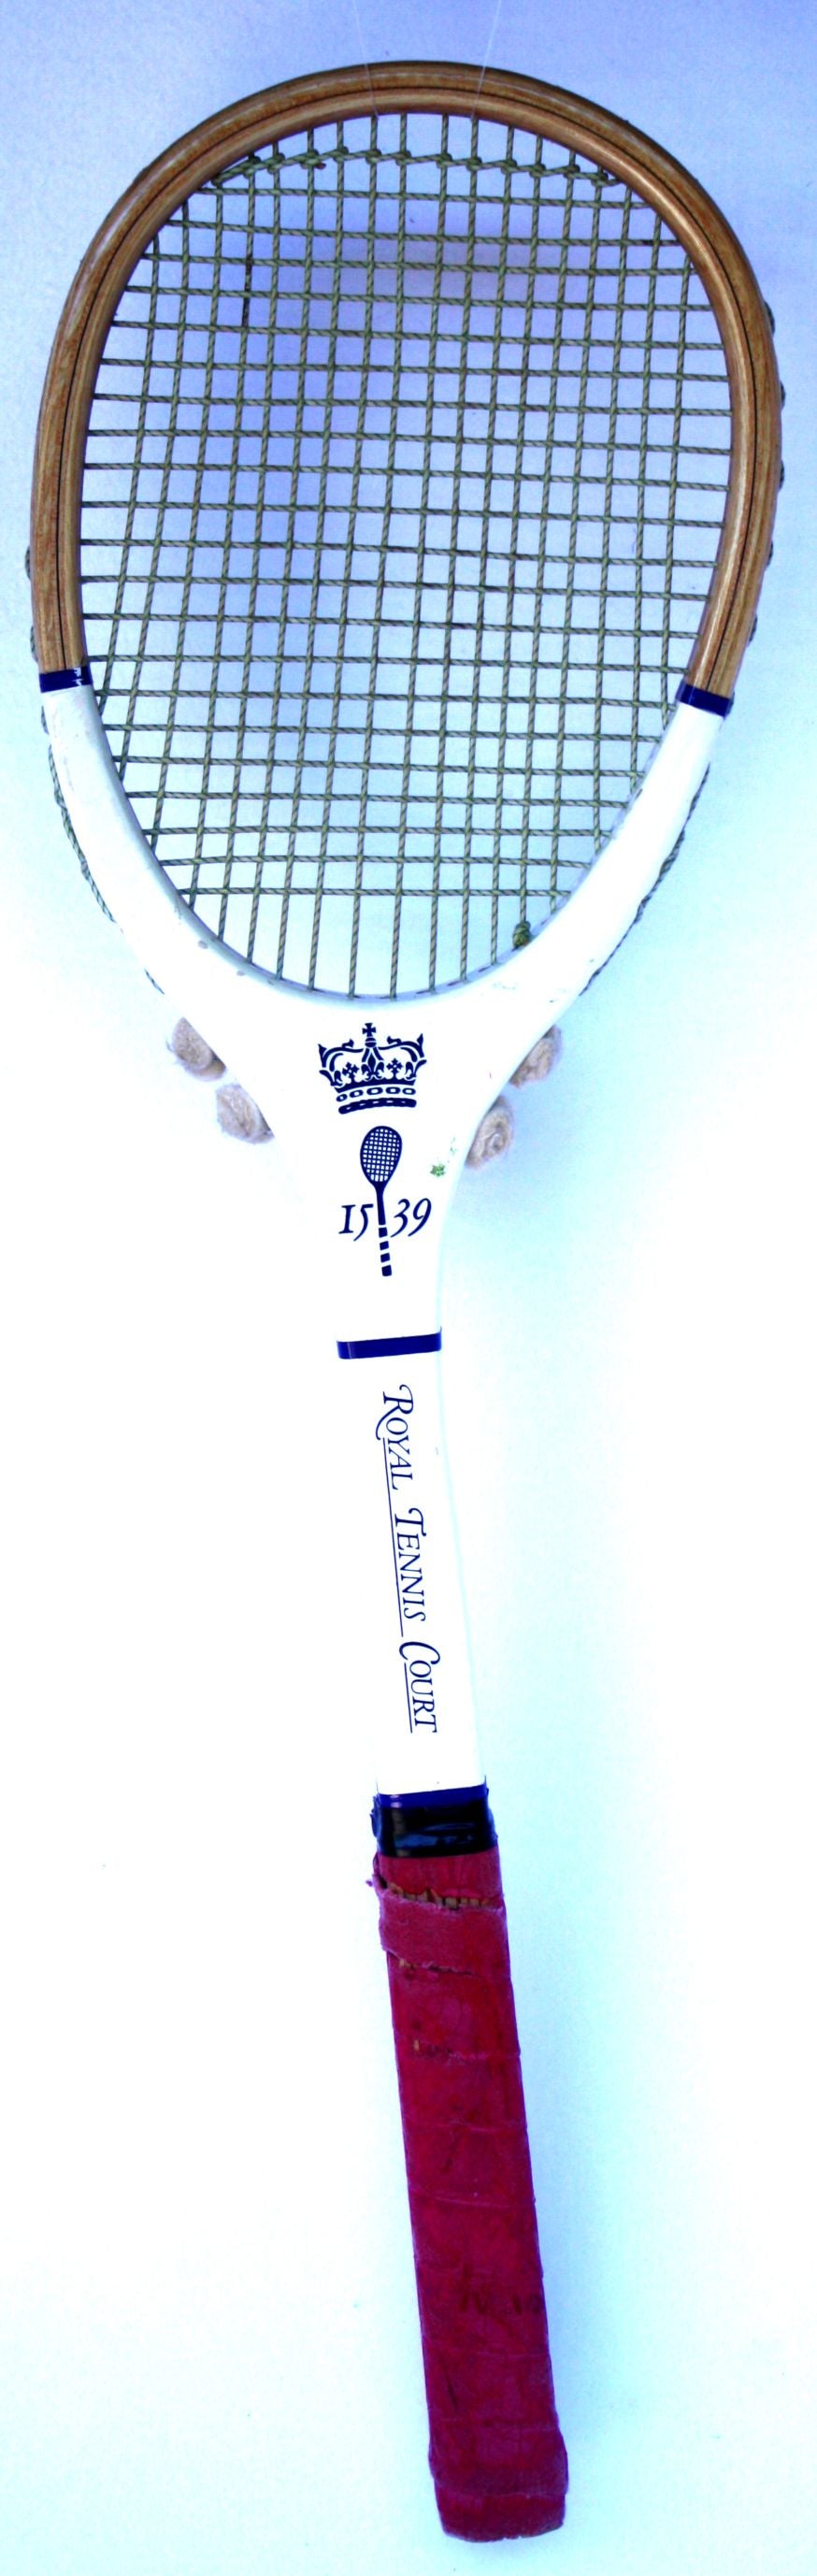 Royal Tennis Court 2